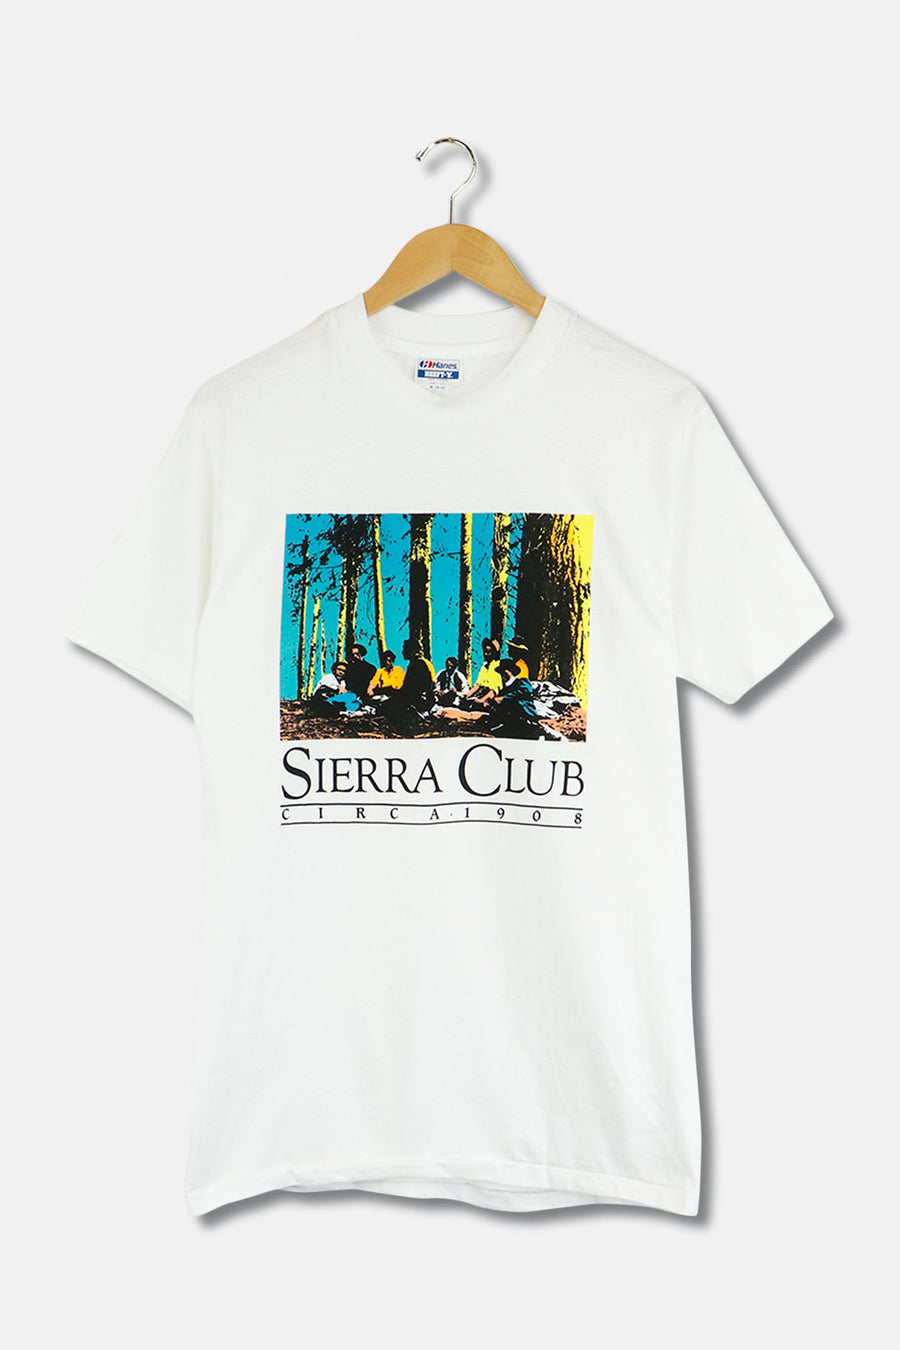 Sierra Club T Shirt Sz M Vintage Single Stitch